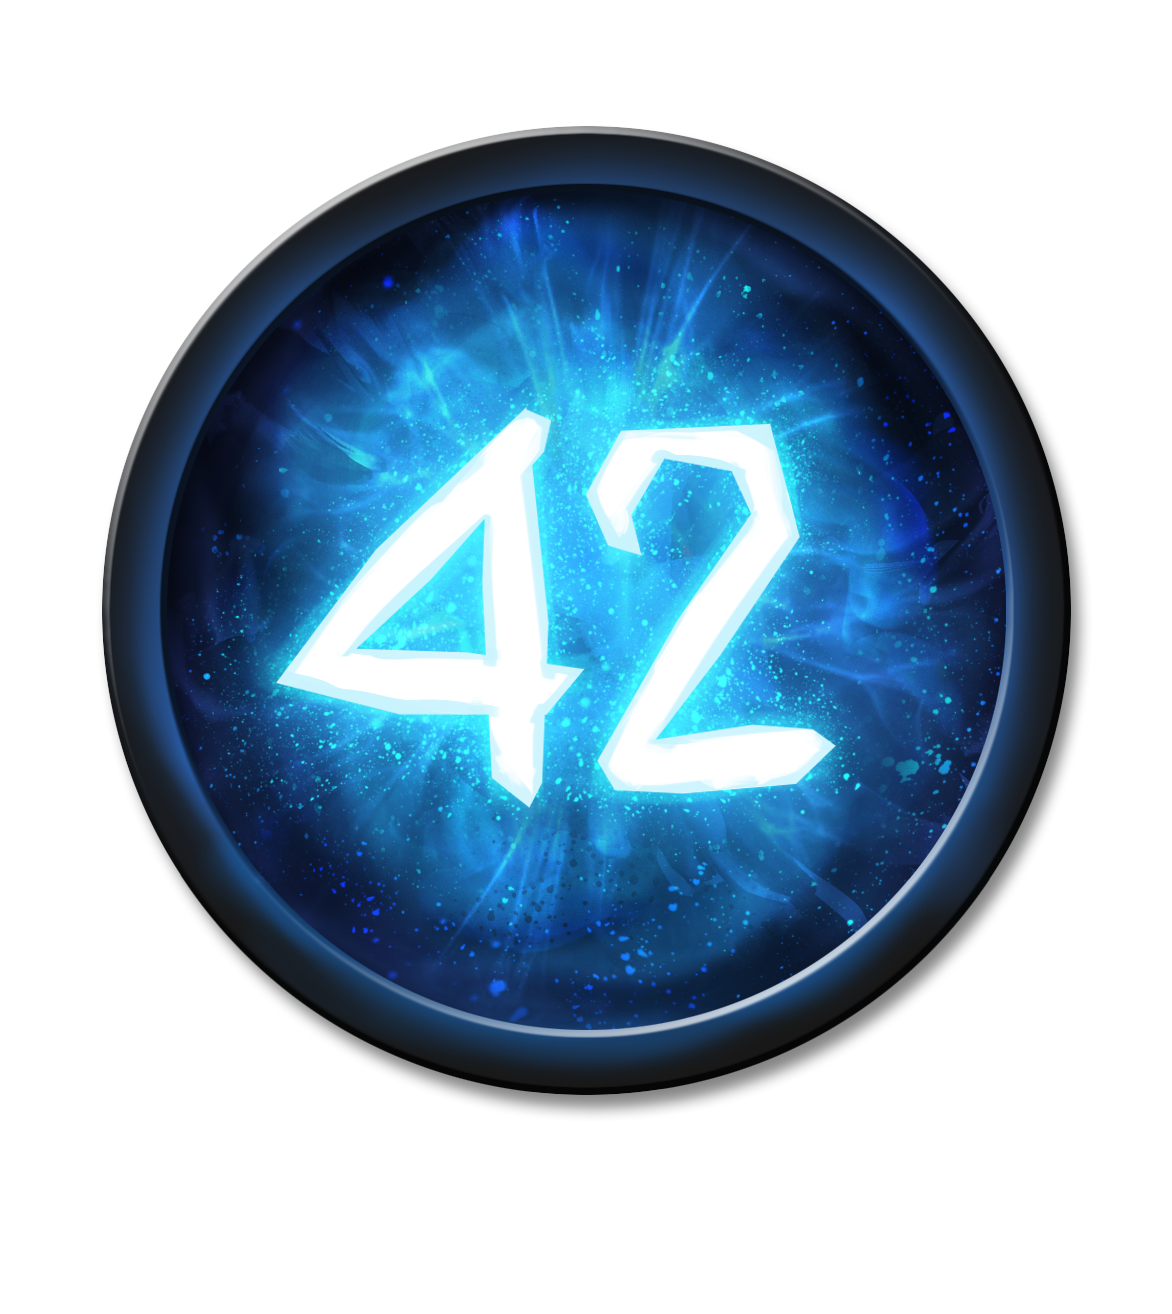 Perfection42’s logo